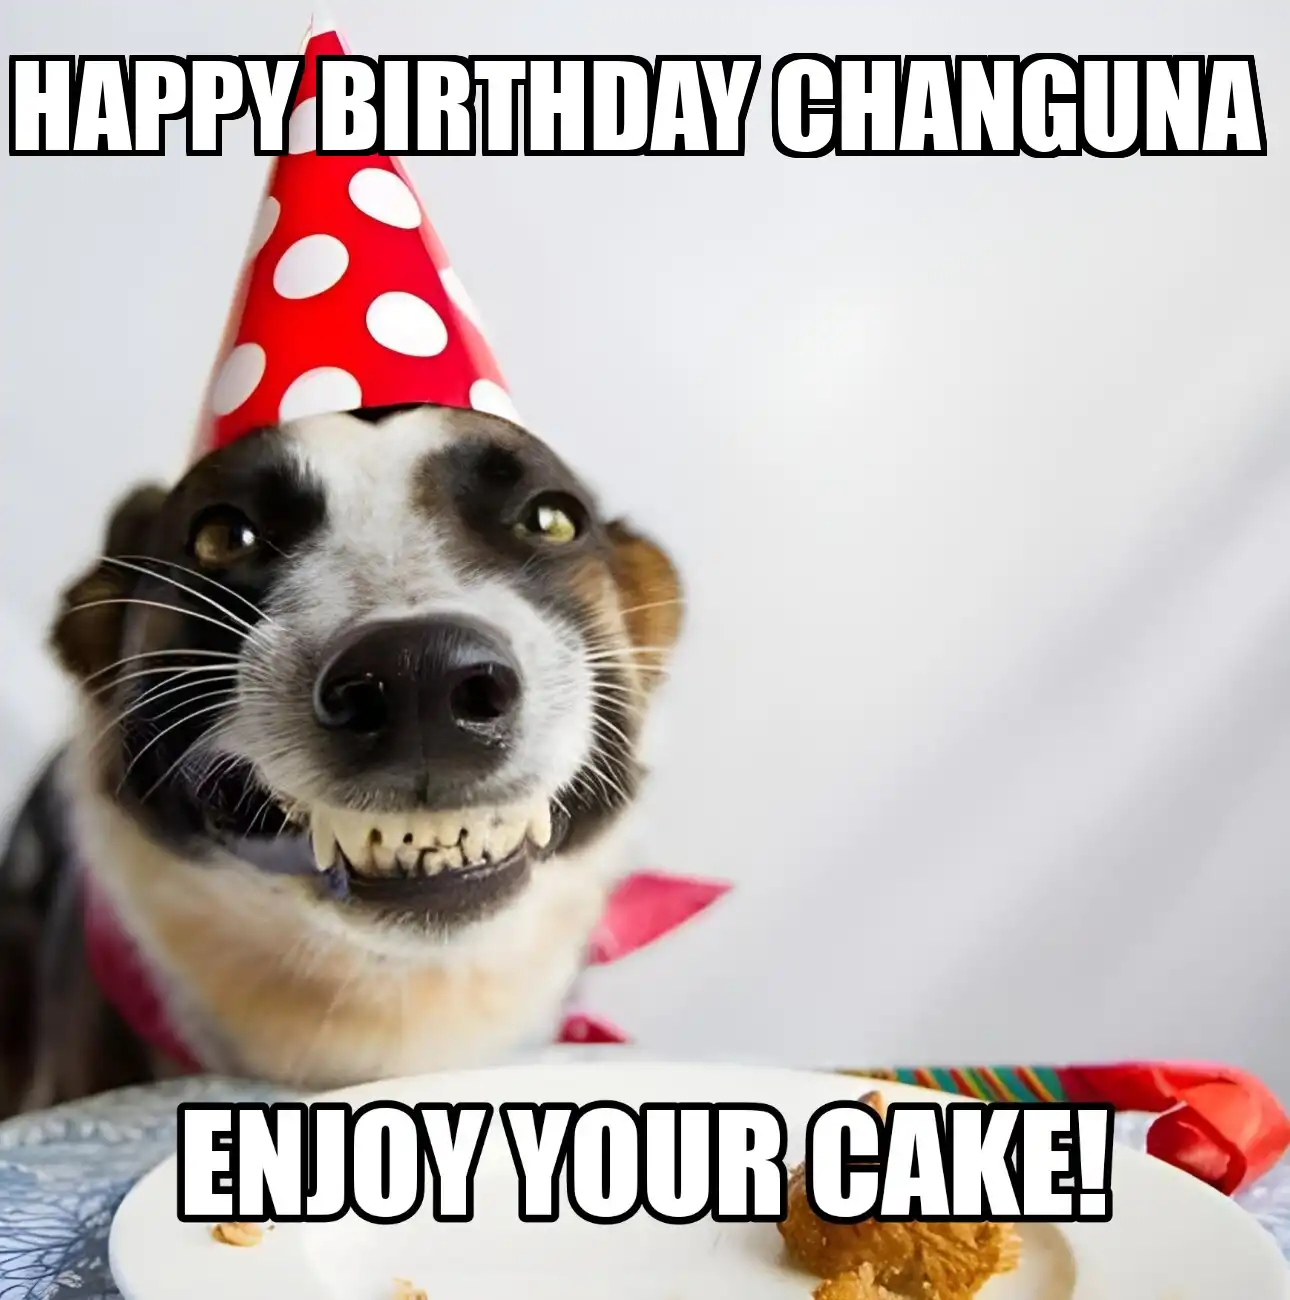 Happy Birthday Changuna Enjoy Your Cake Dog Meme